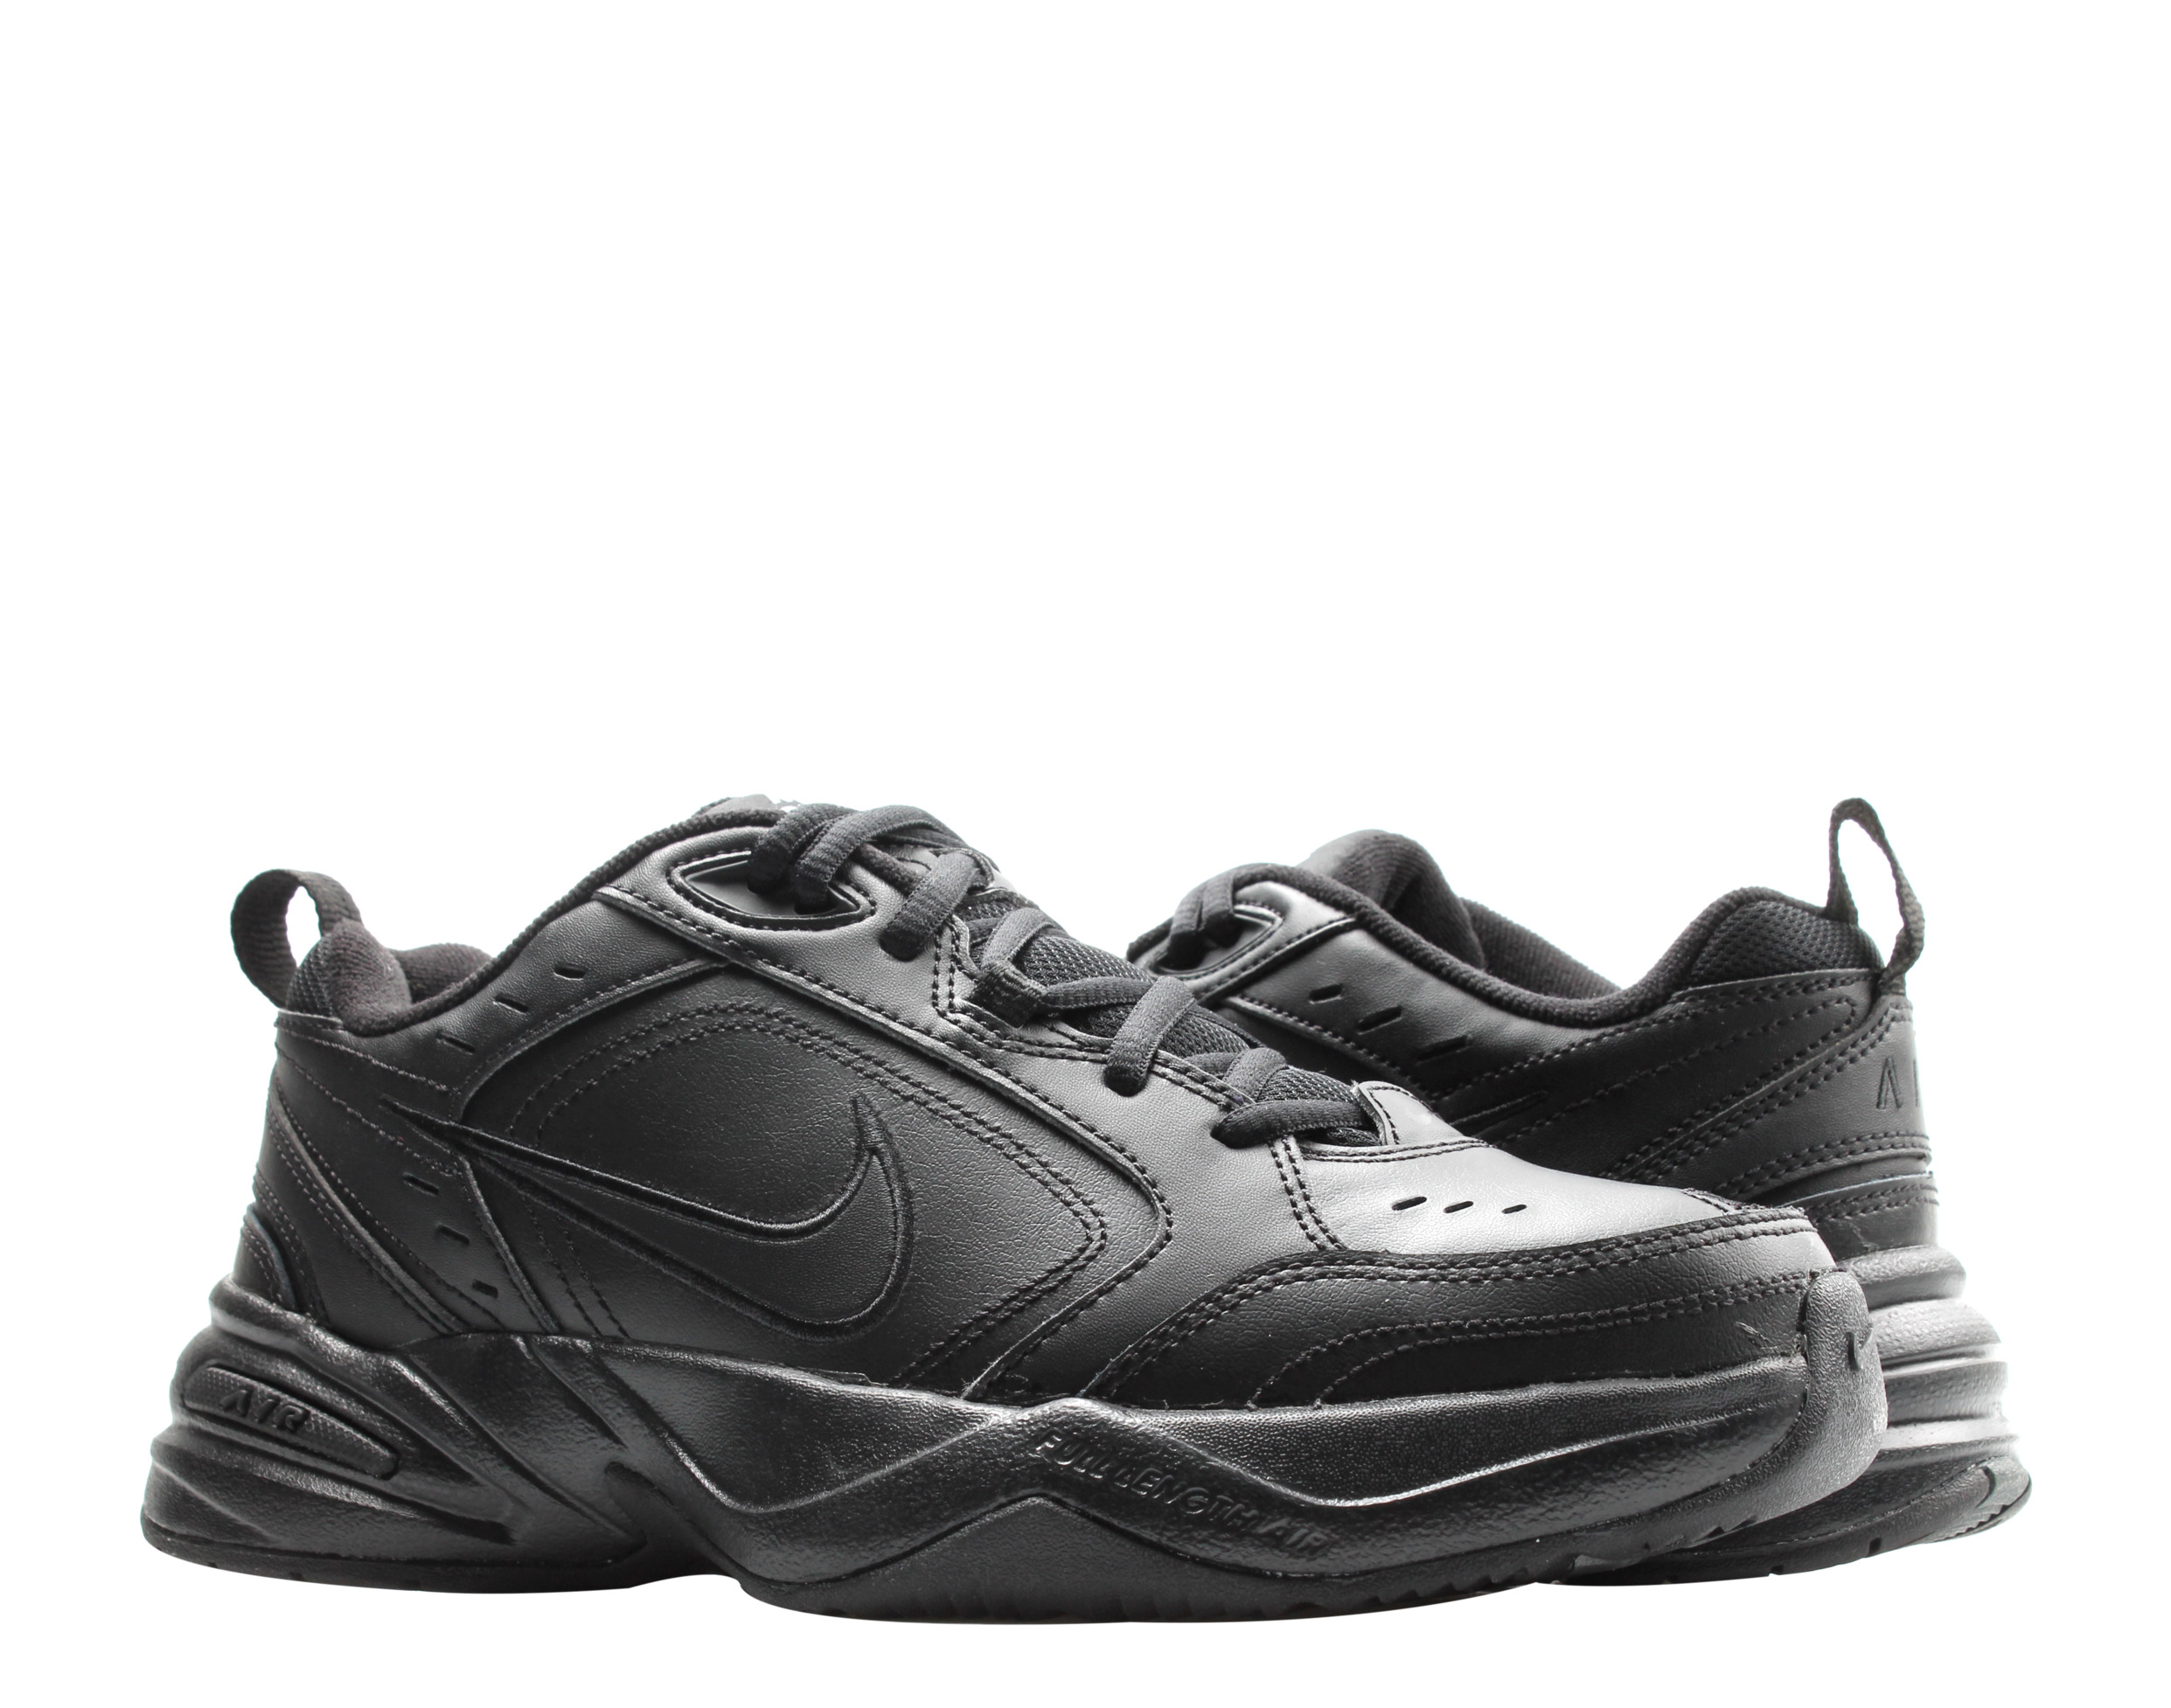 Nike Air Monach IV Men's Cross Training Shoes Size 9M - image 1 of 6